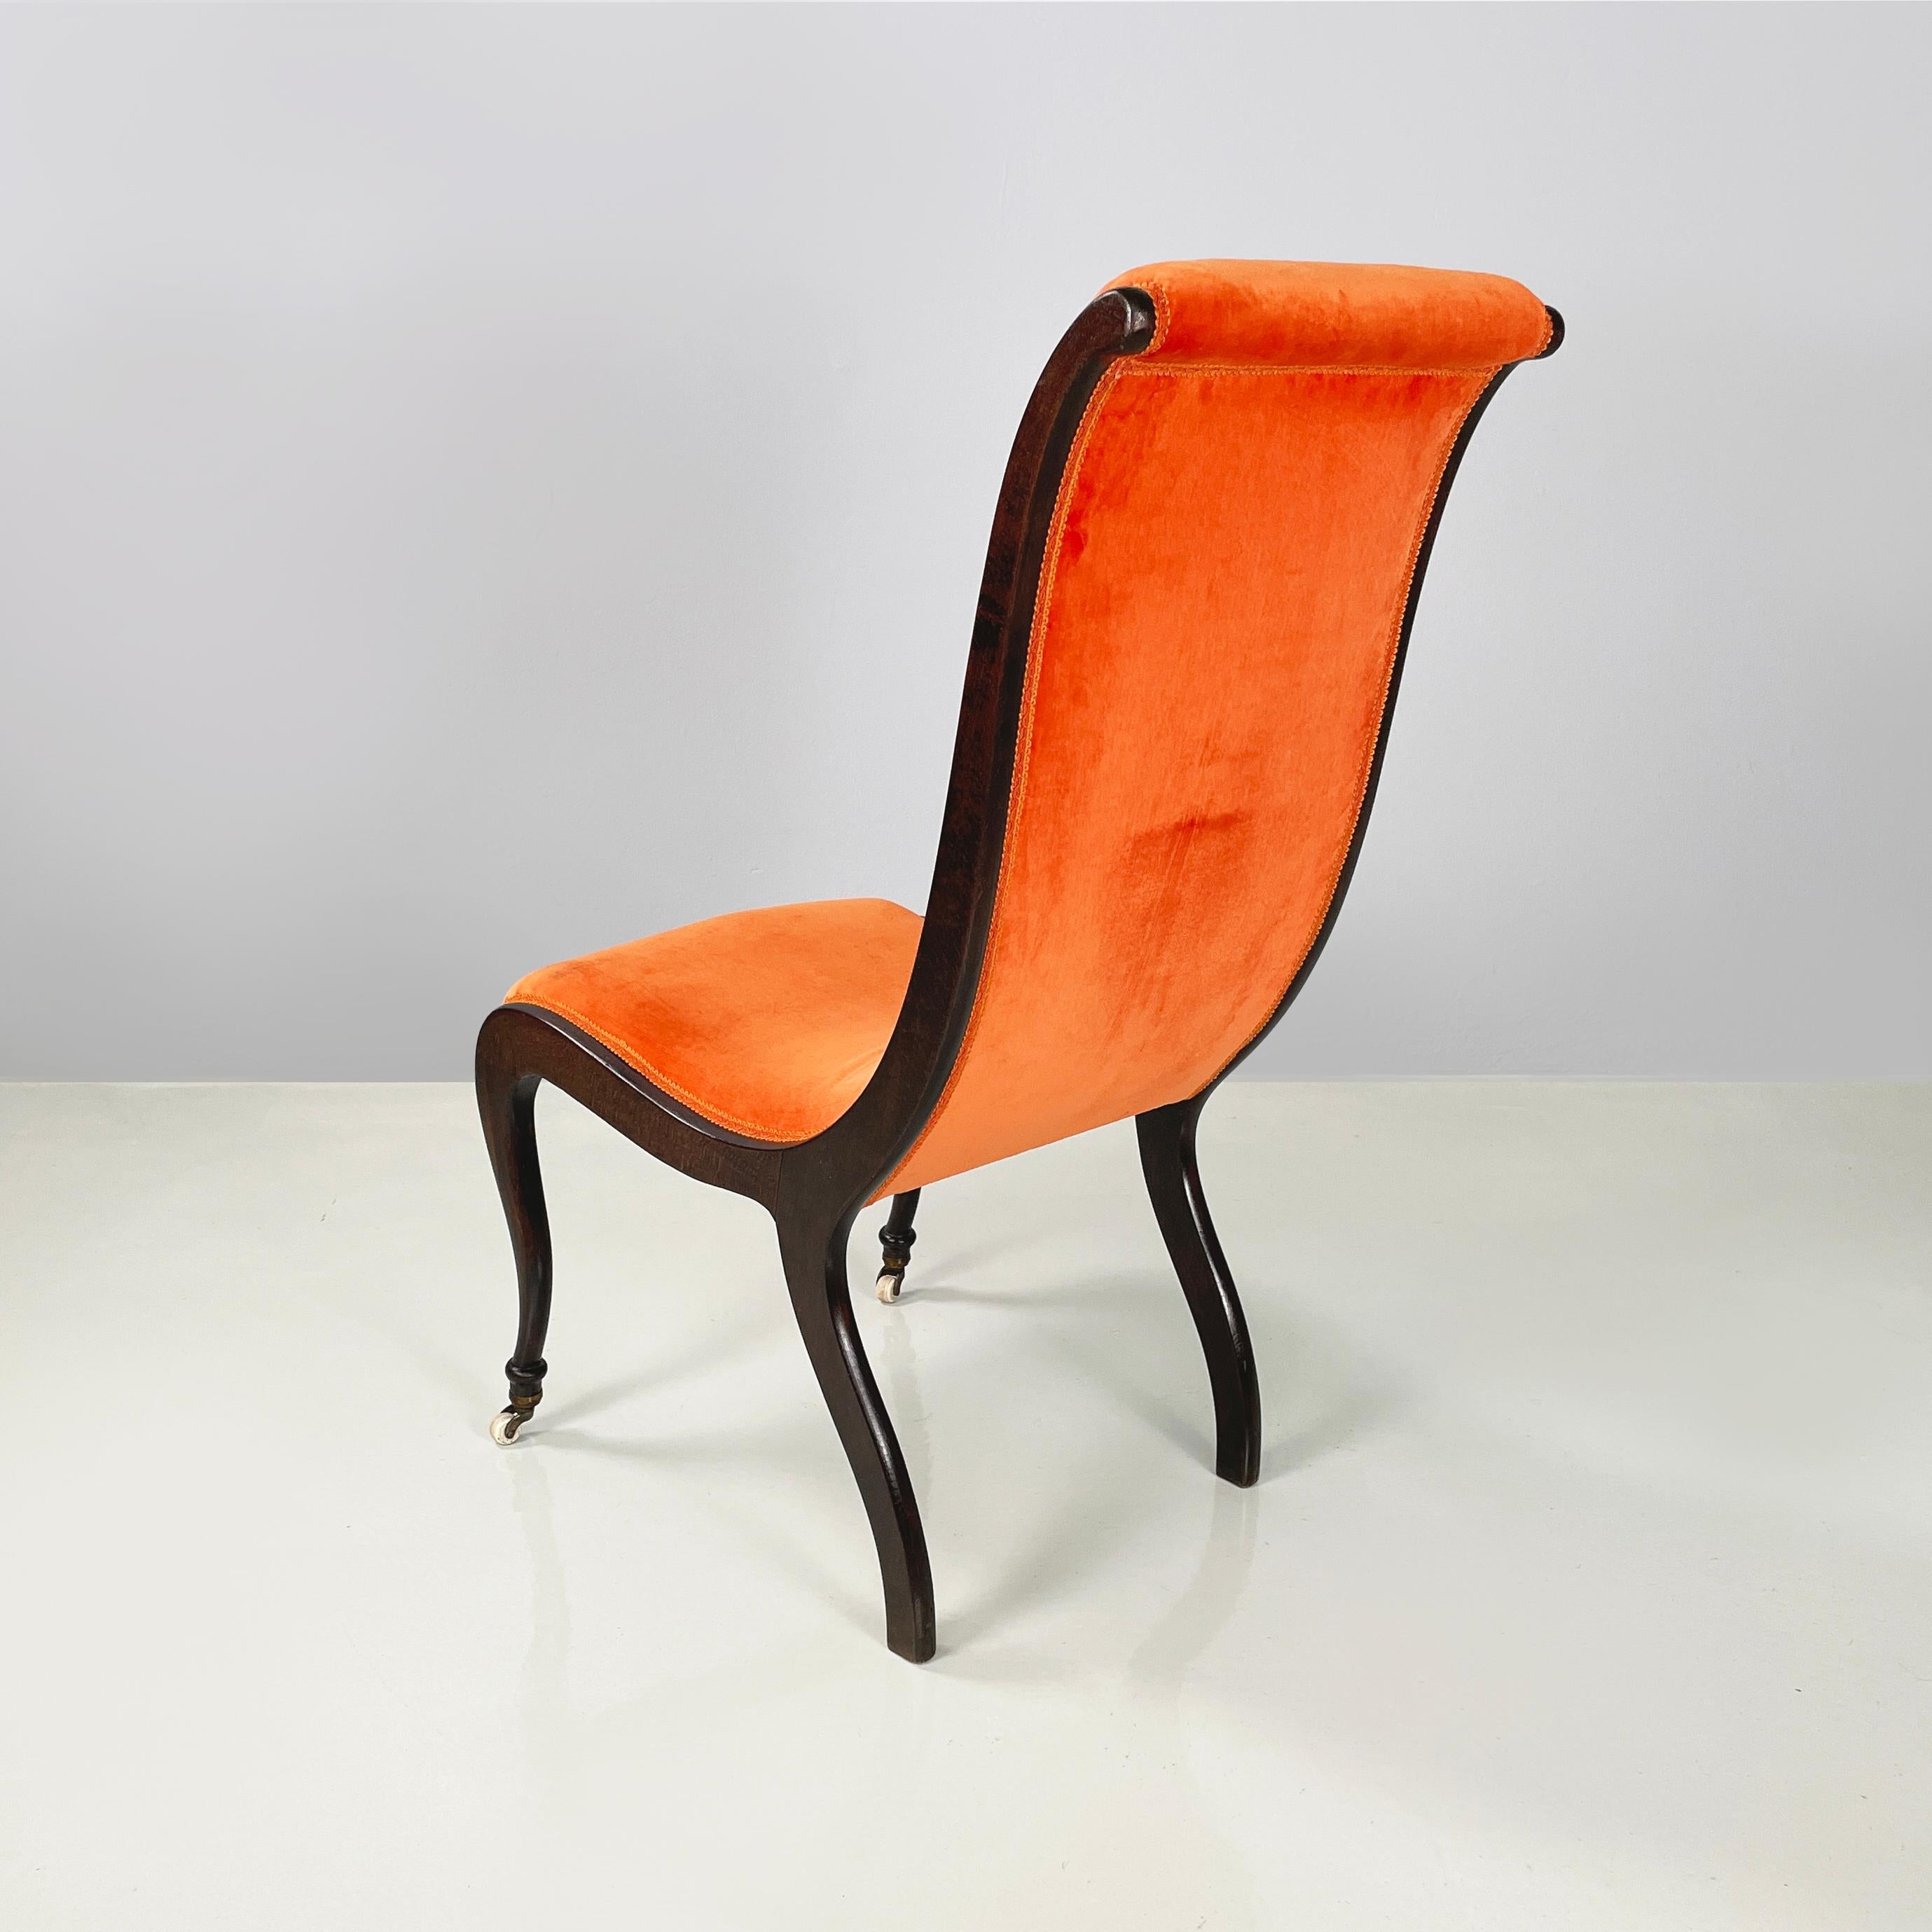 Danish mid-century modern Chair in orange velvet and dark wood, 1950s In Good Condition For Sale In MIlano, IT